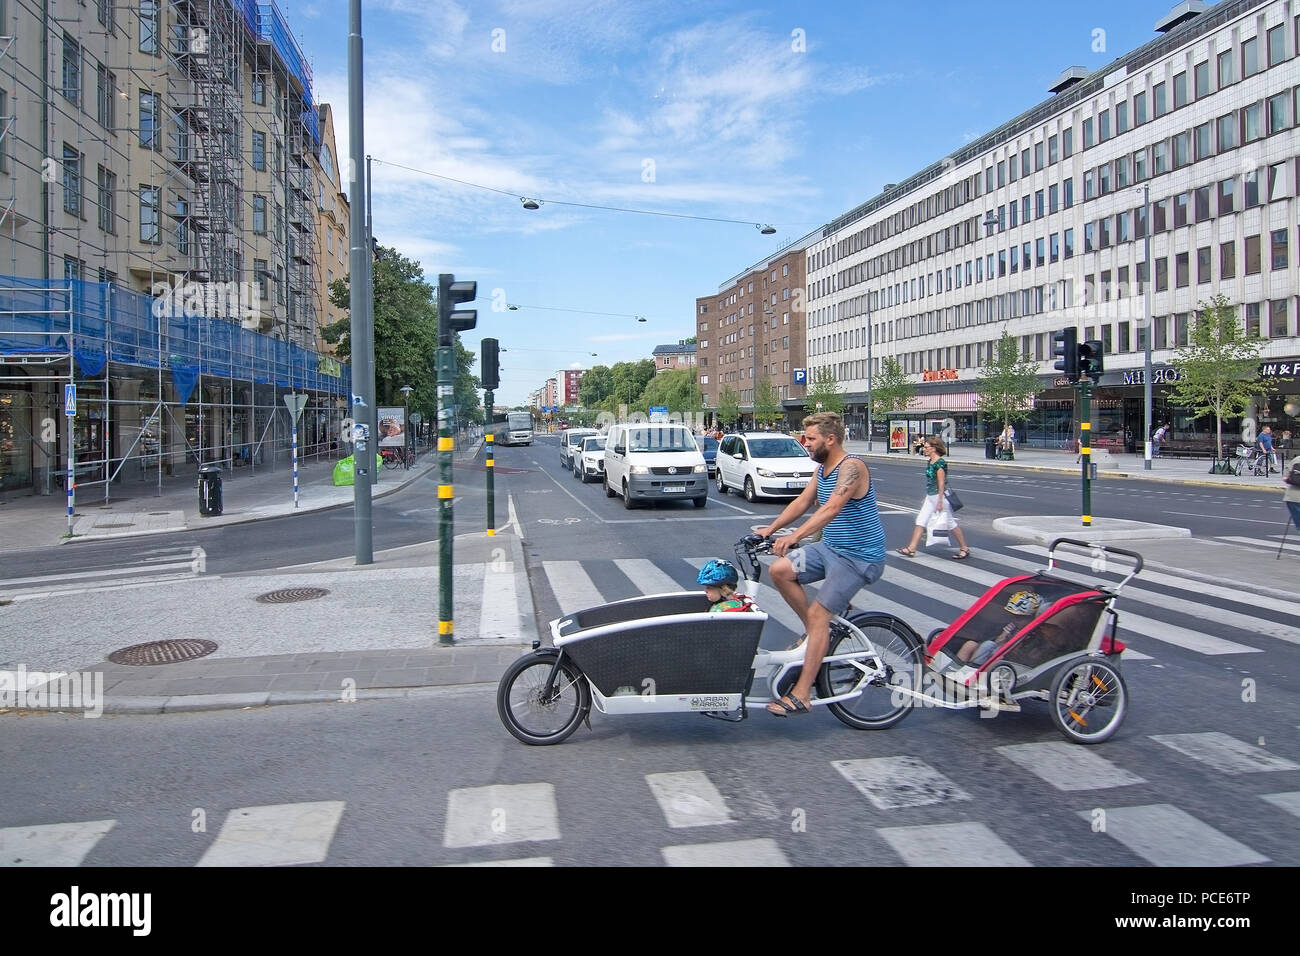 STOCKHOLM, Schweden - 11. JULI 2018: Radfahrer mit Kind wagen Kreuze Fridhemsplan am 11. Juli 2018 in Stockholm, Schweden. Stockfoto